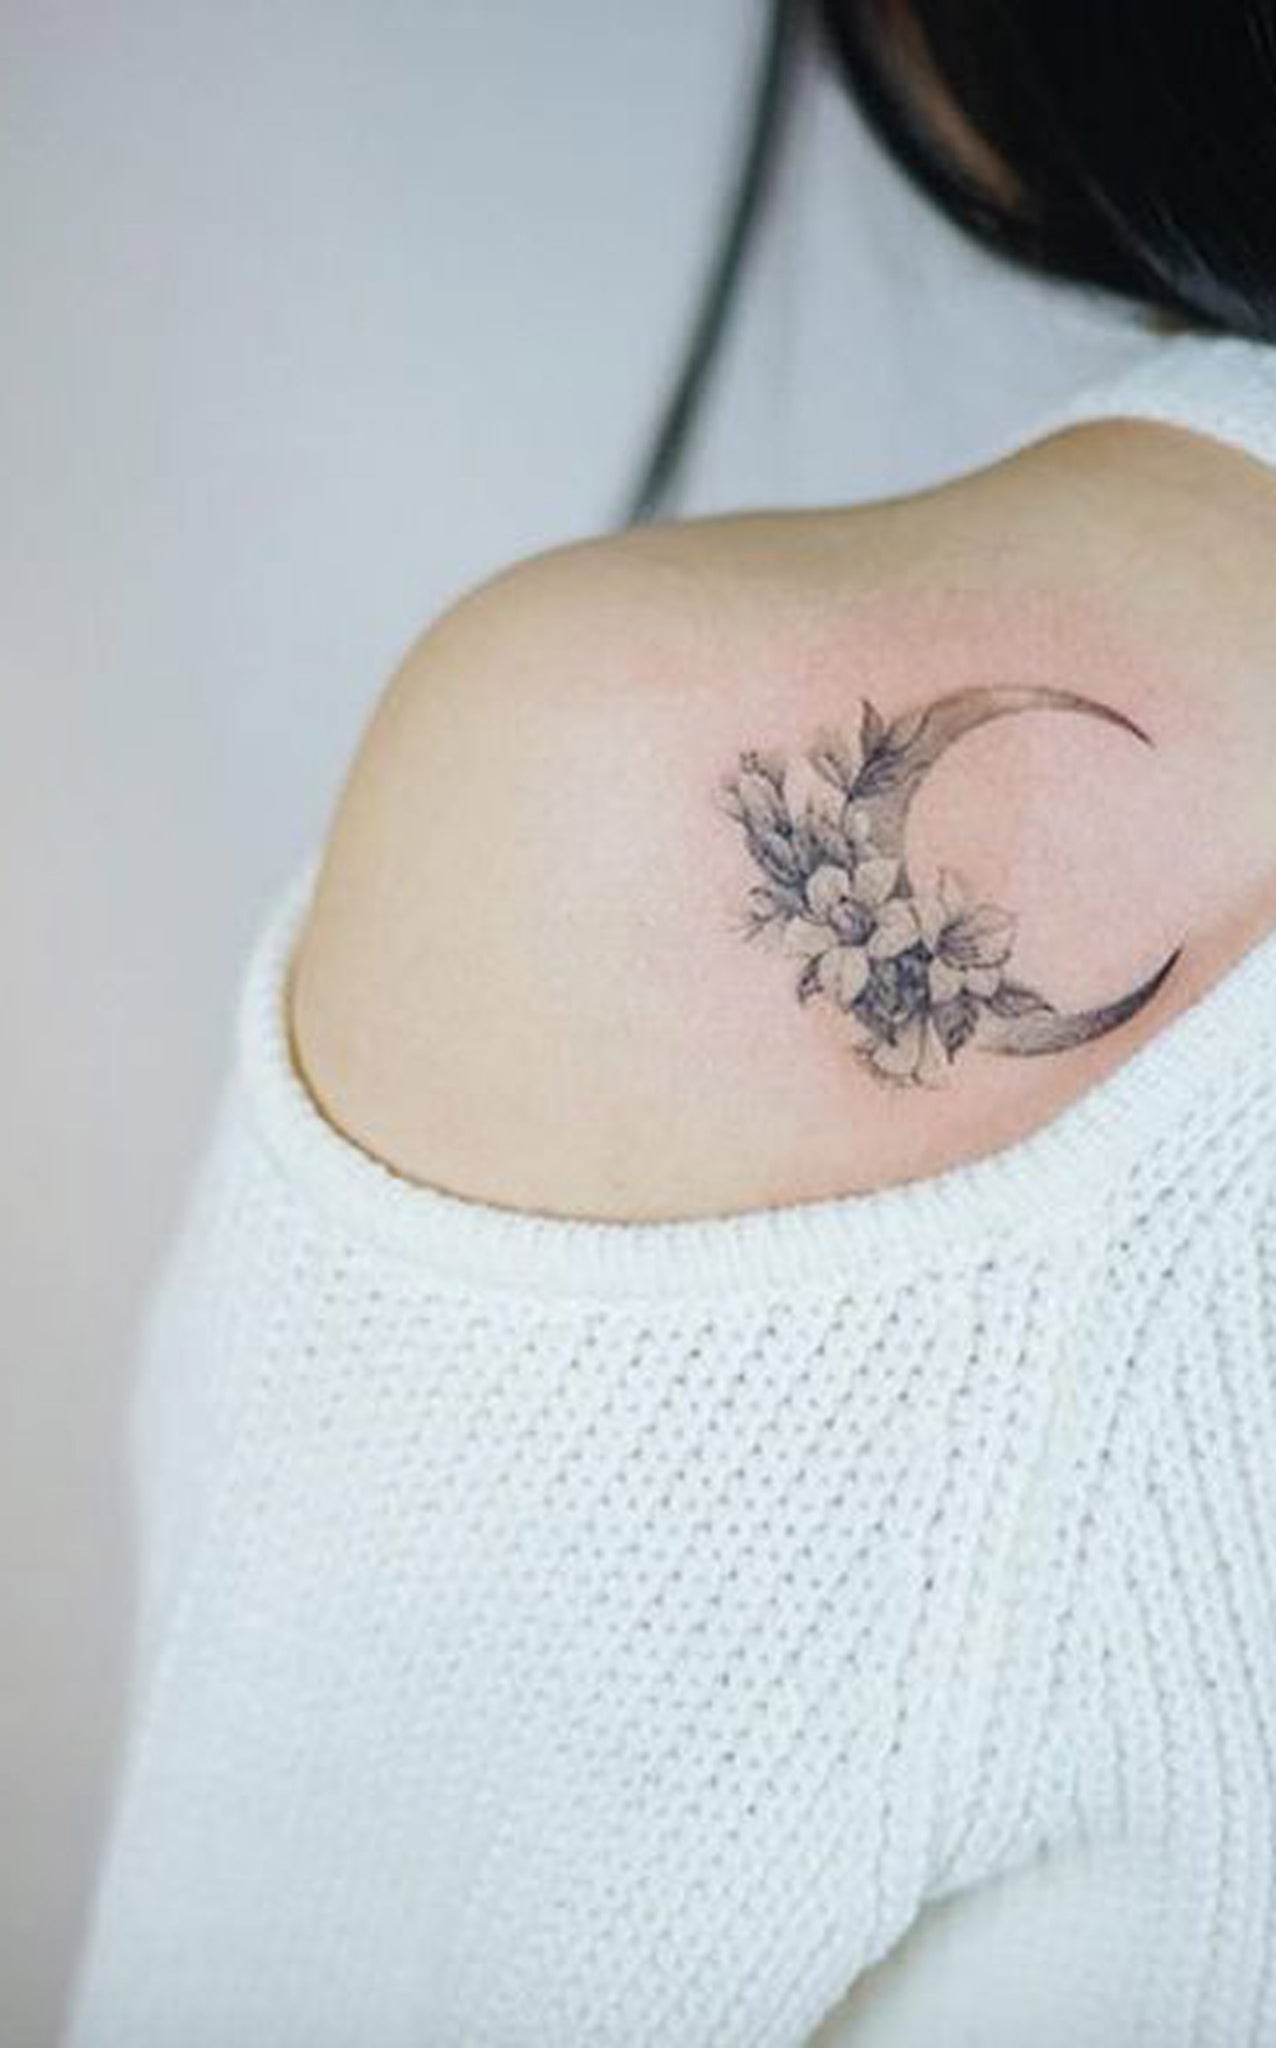 Delicate Floral Moon Realistic Shoulder Tattoo Ideas for Women -  Delicada luna floral Realista Hombro Ideas del tatuaje para las mujeres - www.MyBodiArt.com